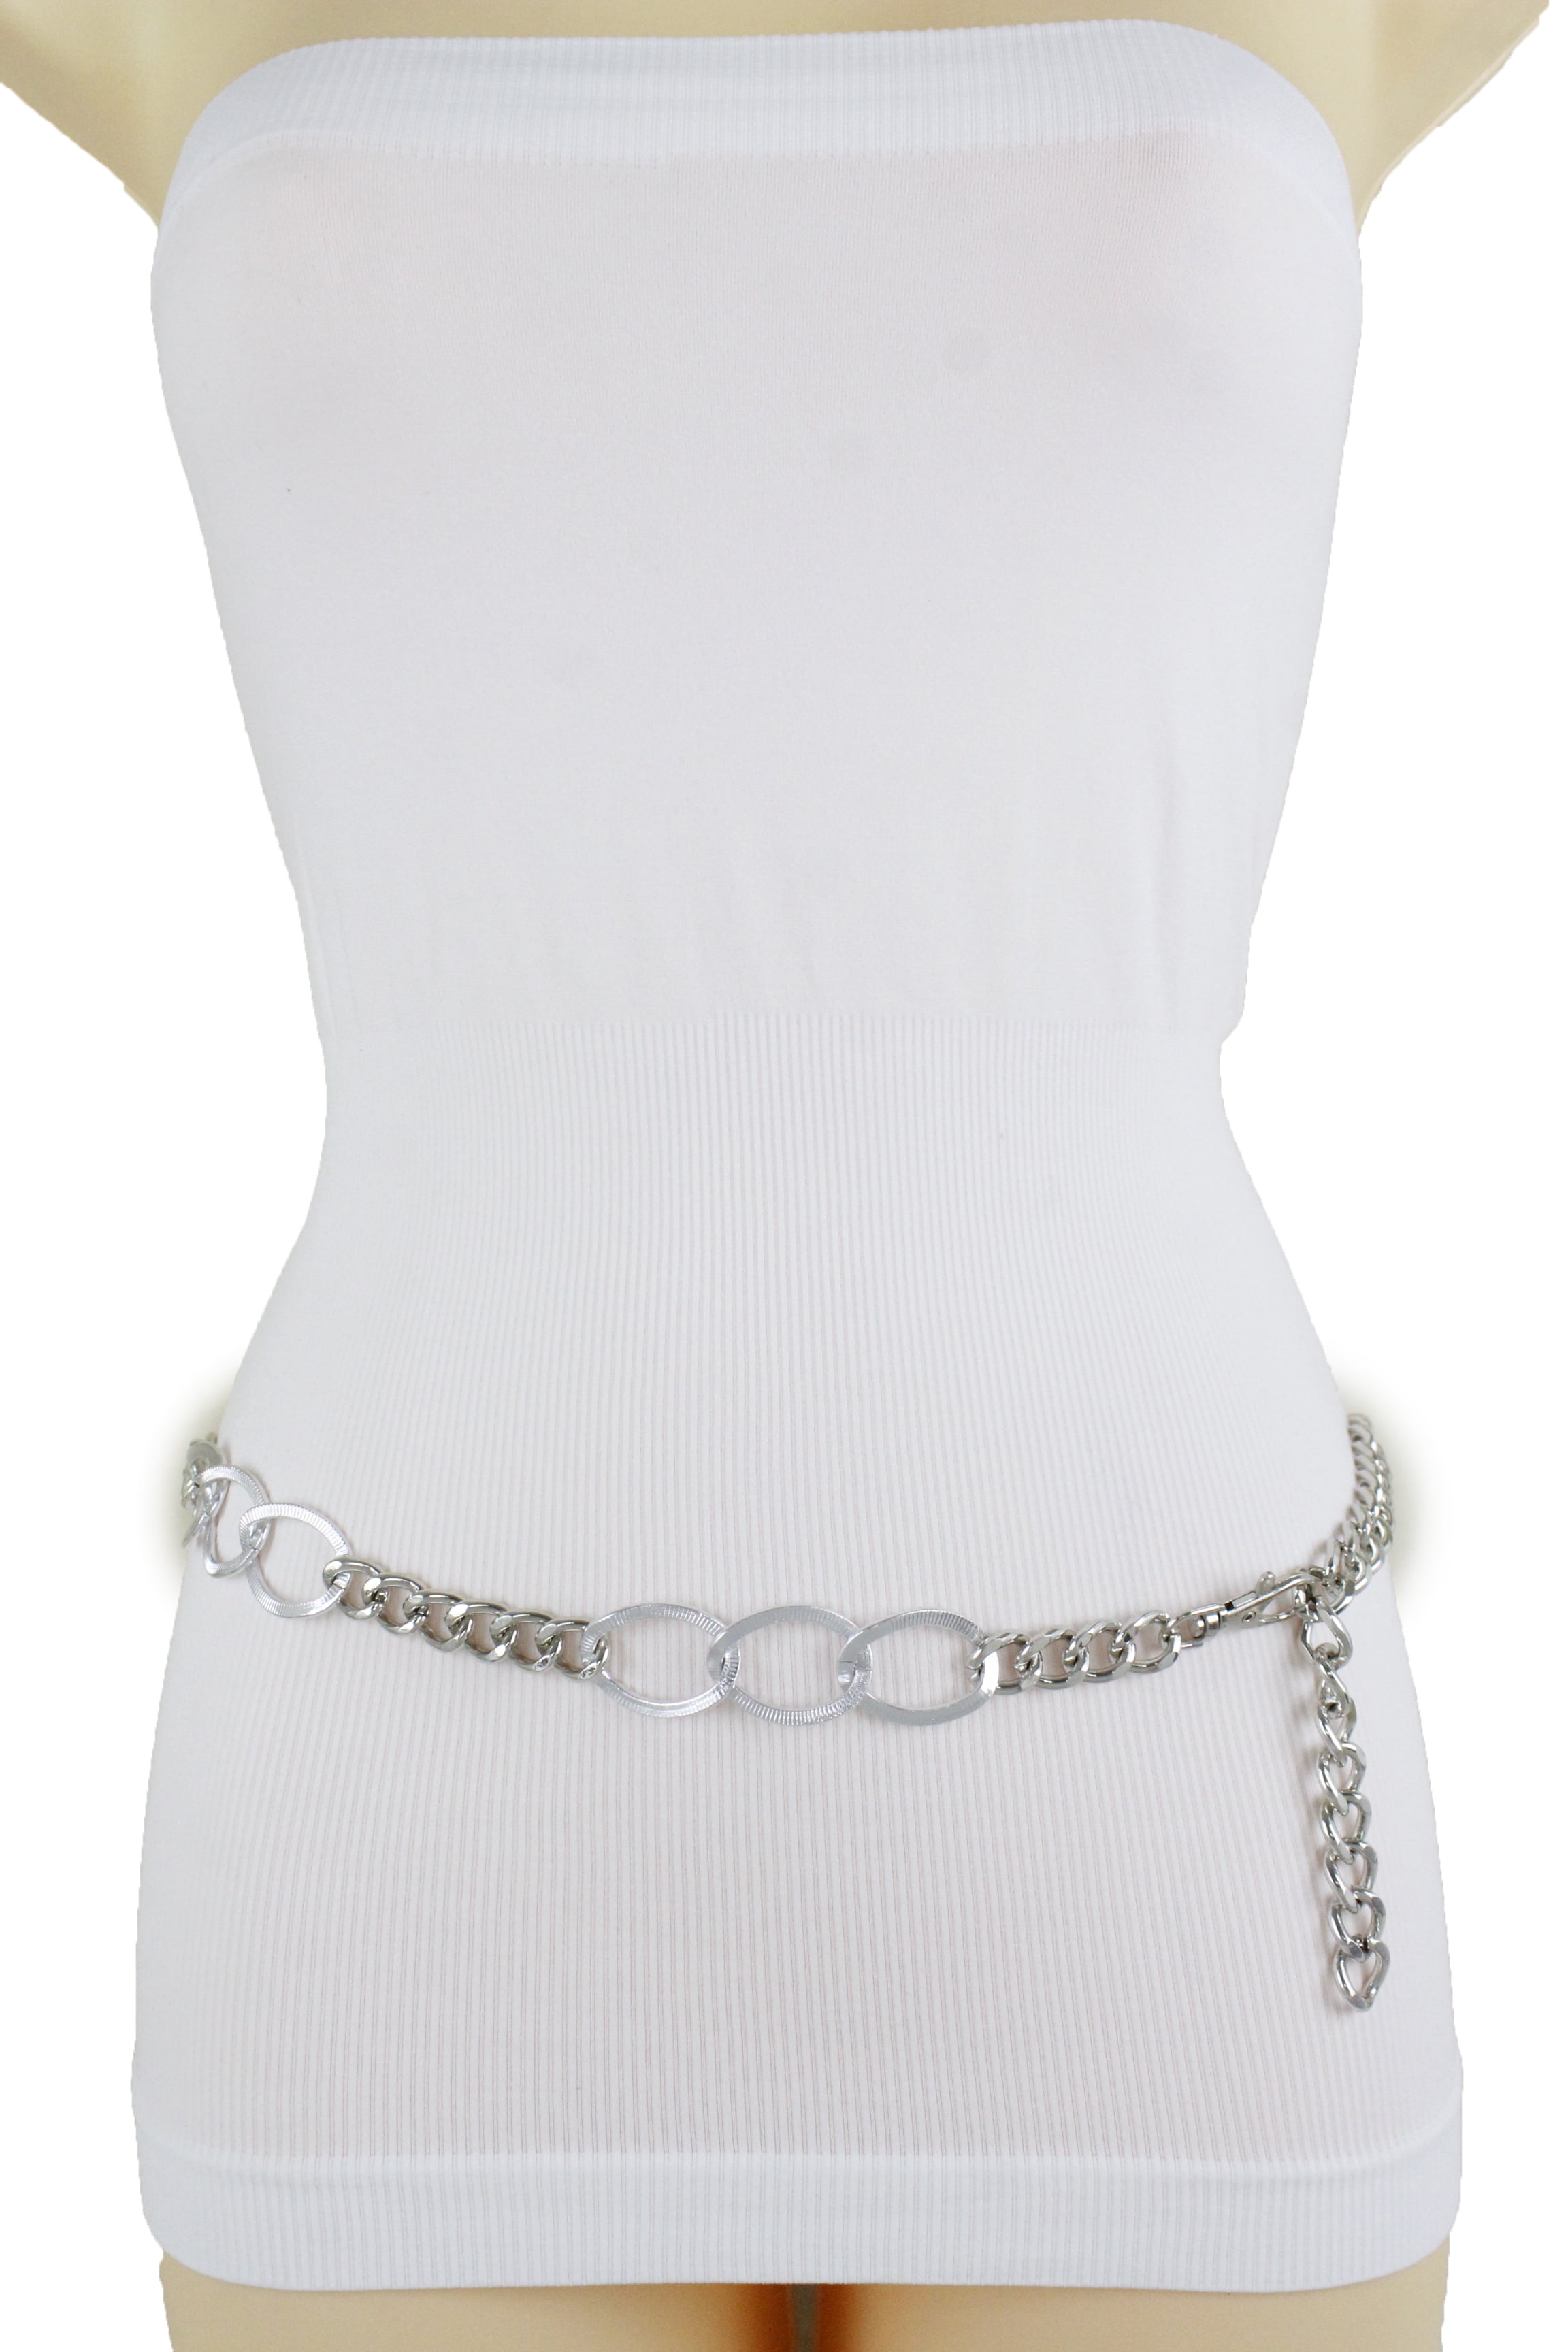 Women Silver Metal Chains Fashion Belt Hip Waist Heart Charm Pendant Size XS S M 